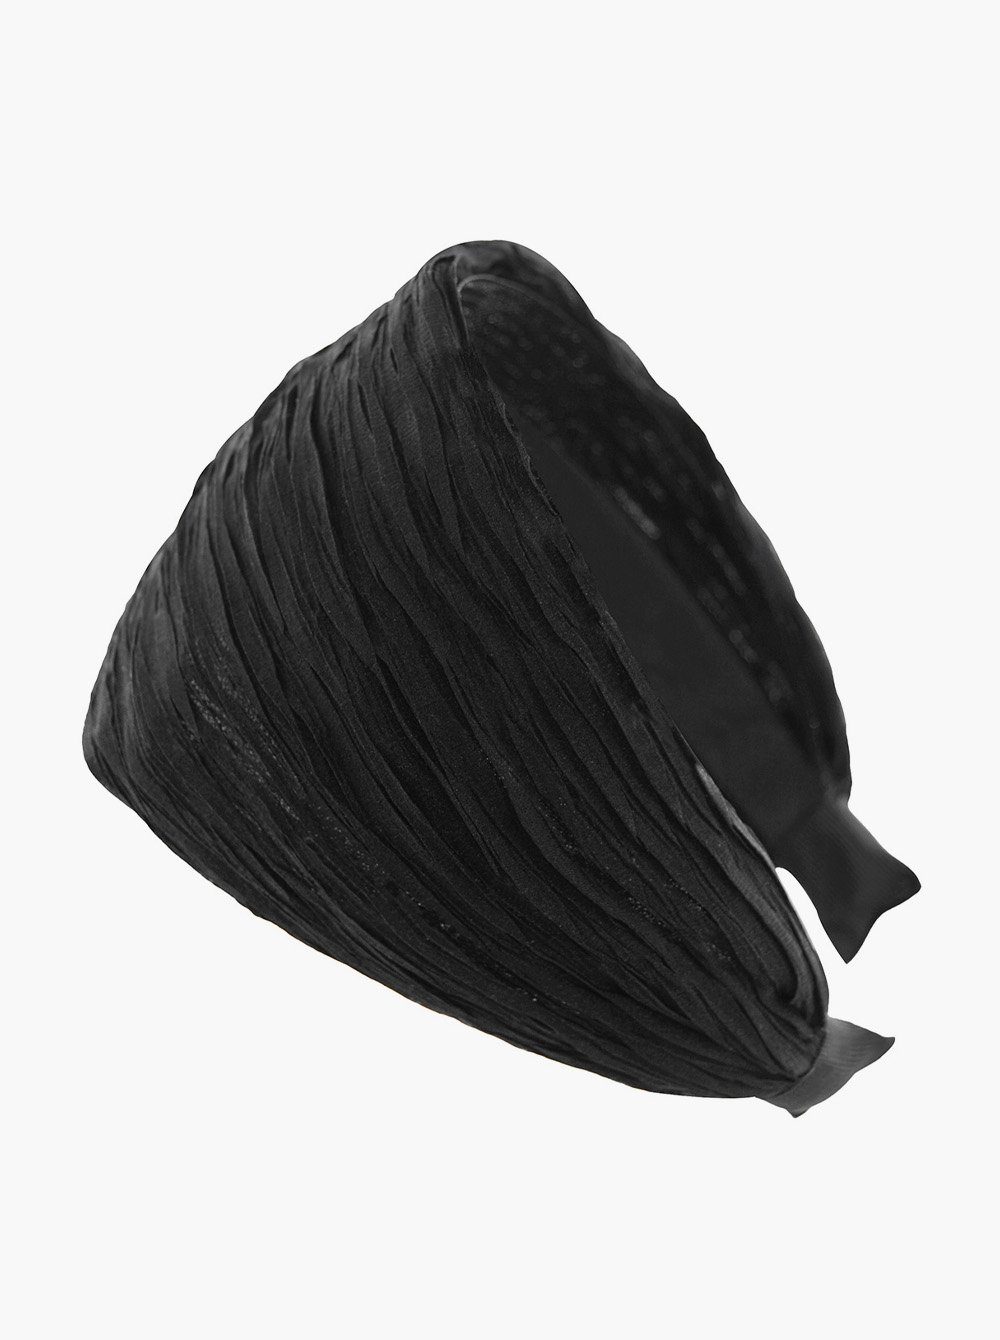 axy Haarreif Breiter Haarreif in Tuchoptik Wunderschön, Damen Breiter Haarreif (Plissierter Stoff) Haarband Haarreifen Schwarz